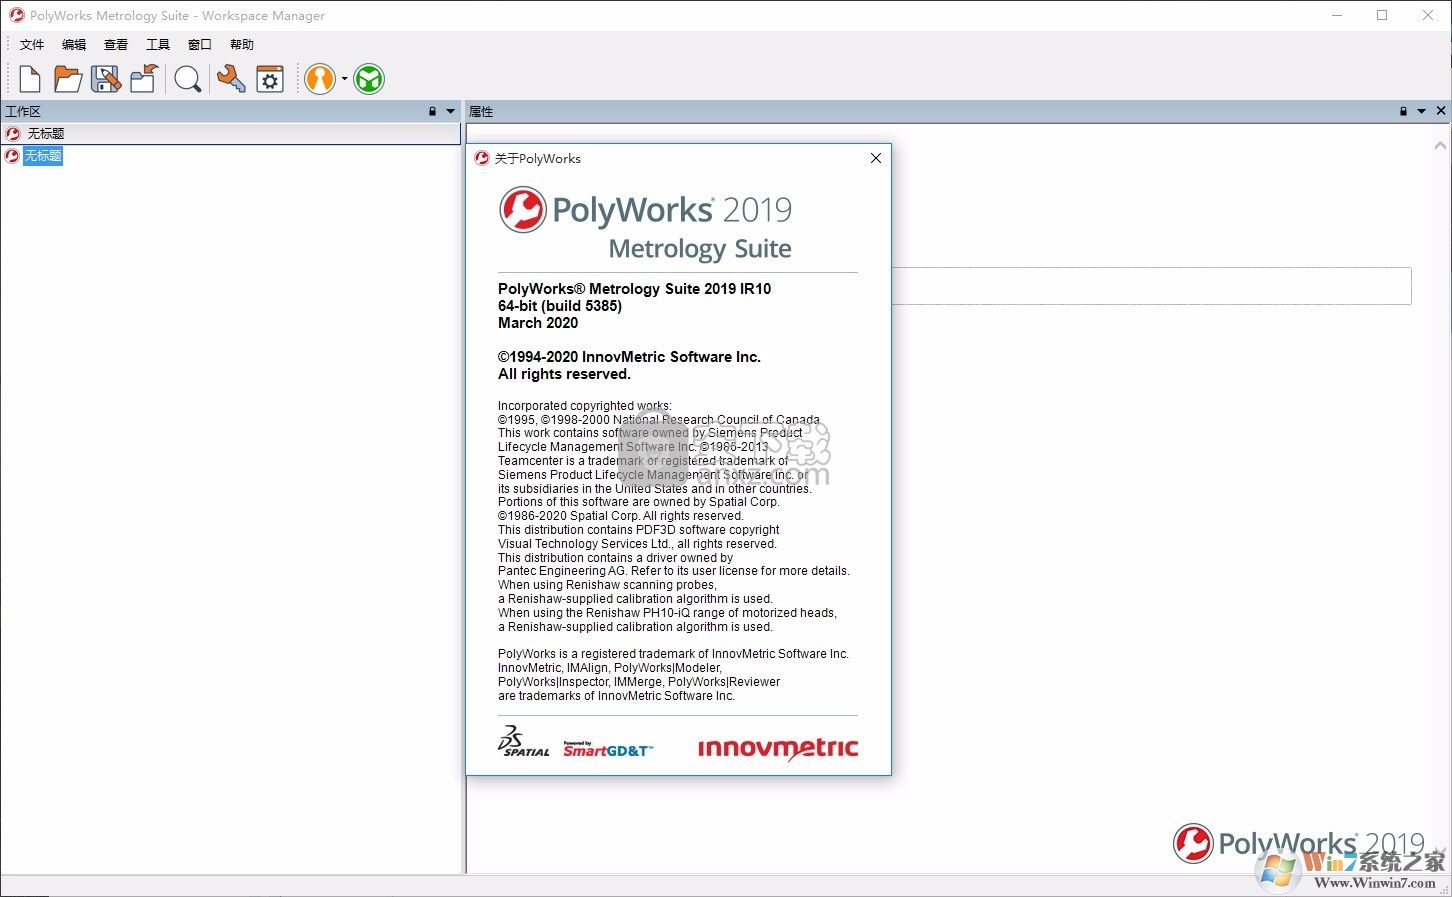 PolyWorks Metrology Suite 2019 